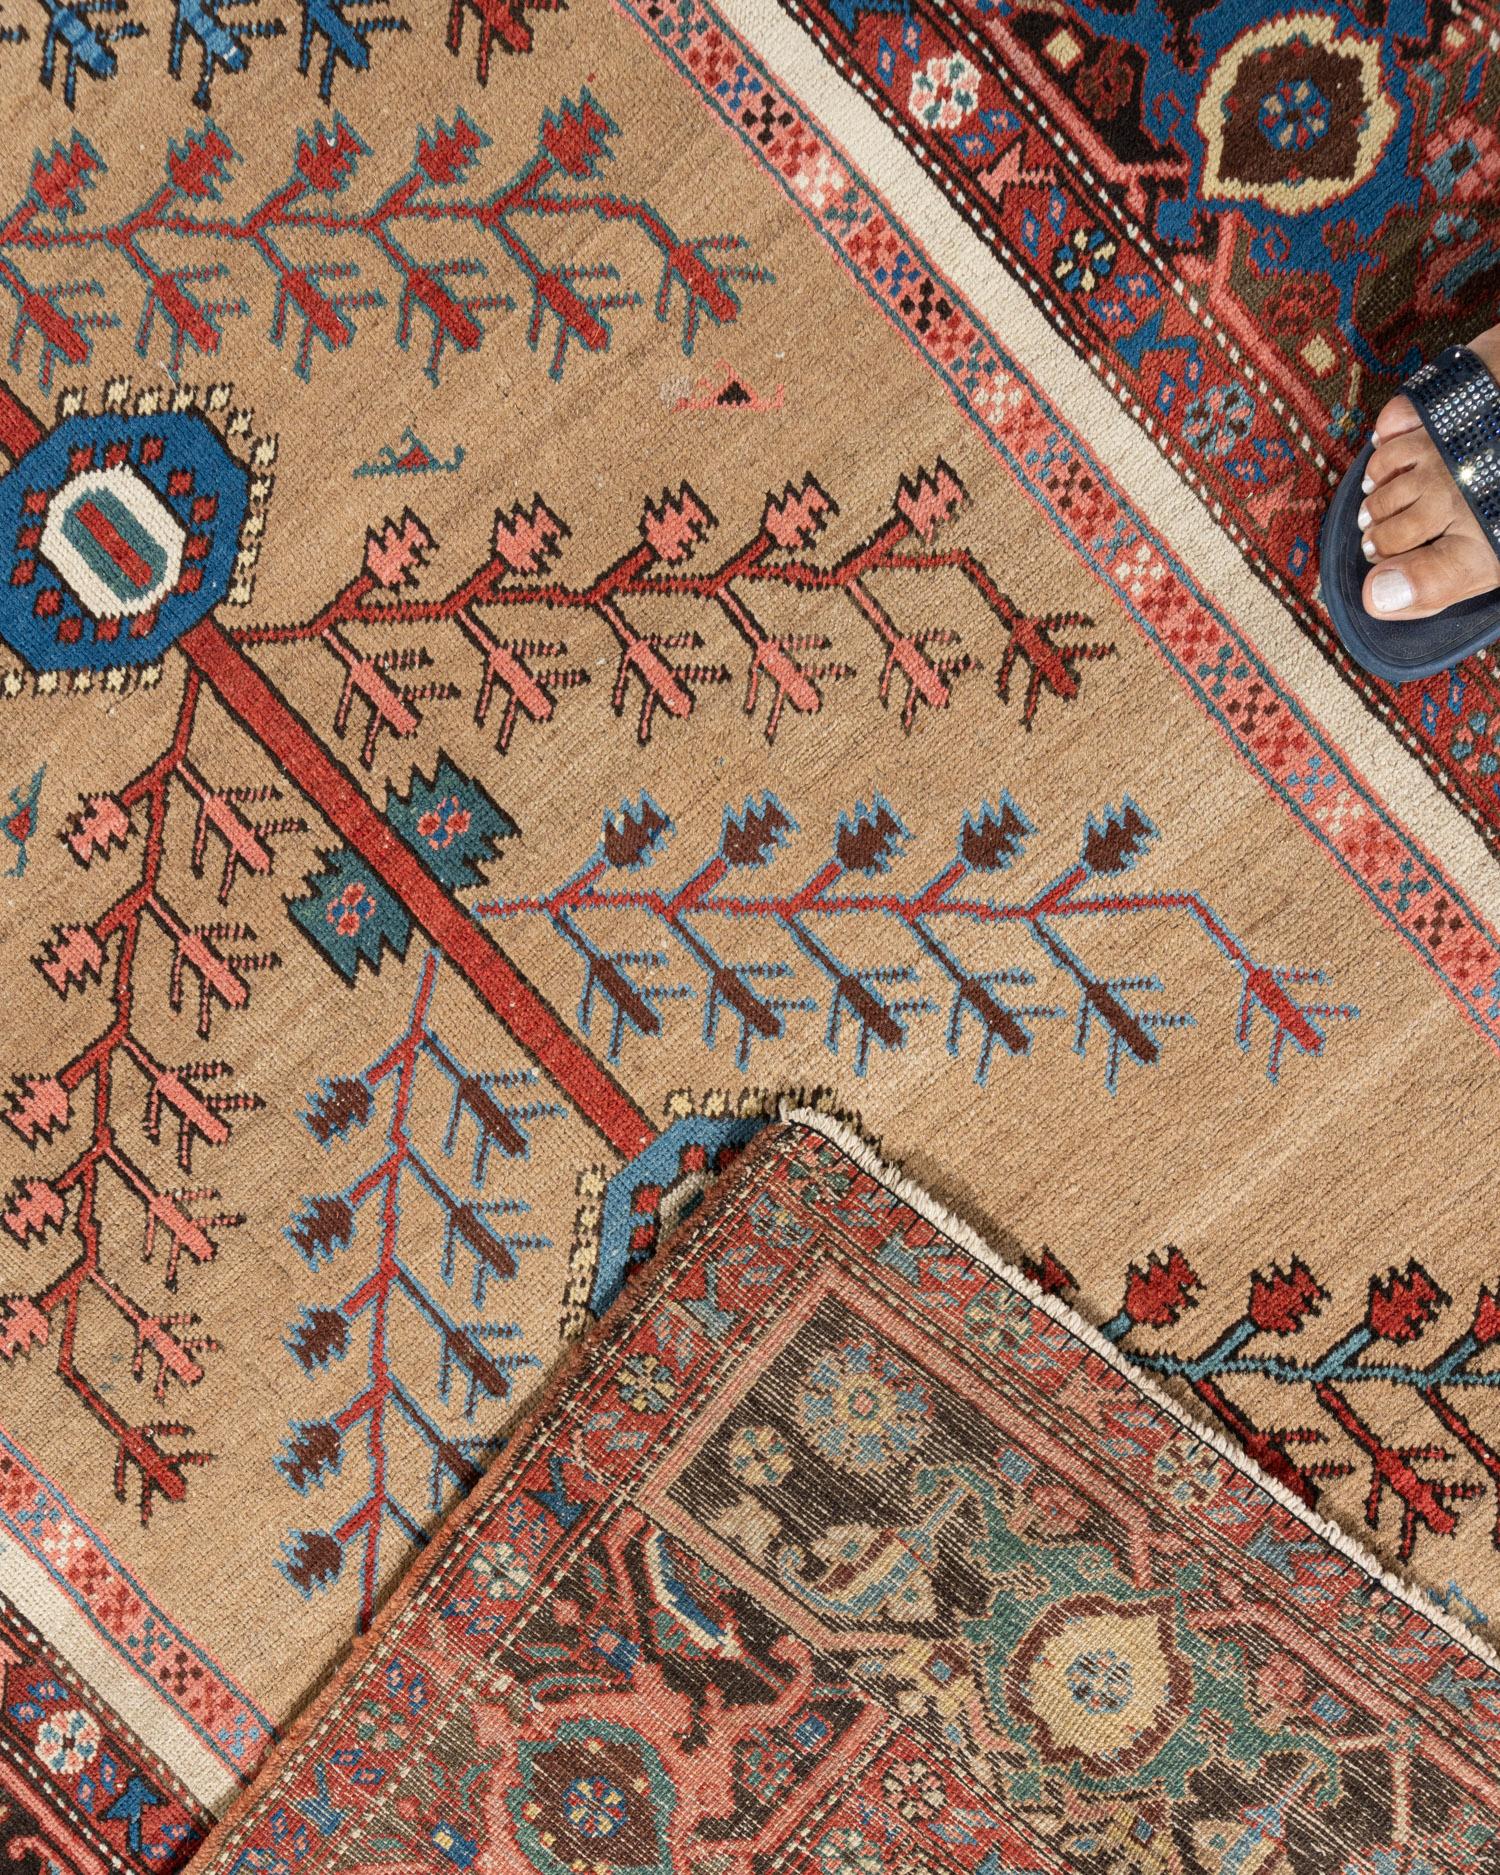 Hand-Woven Antique Persian Camel Hair Bakshaish Area Rug  4'6x6'6 For Sale